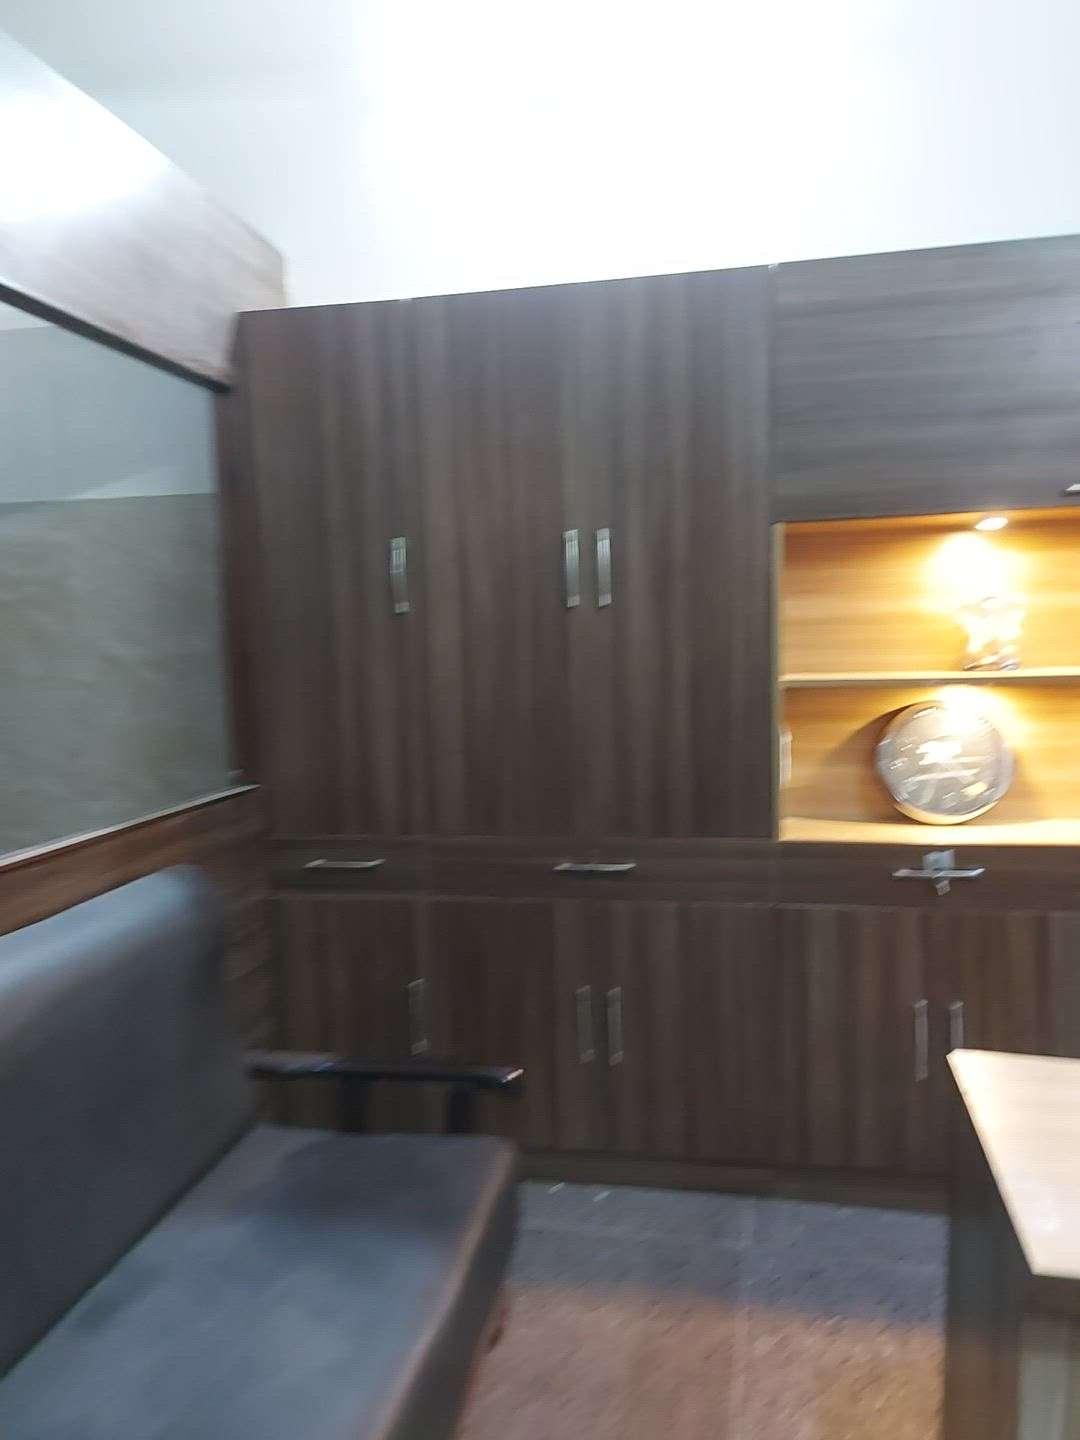 Luxury interior design # Best Interior Designer IN Delhi NCR#Luxury Modular Kitchen # Luxury Modular Almari # Luxury Modular LCD Panel # LUXURY Double Bed # Luxury Modular Sofa Set # Full Interiors Design # 99997 92199